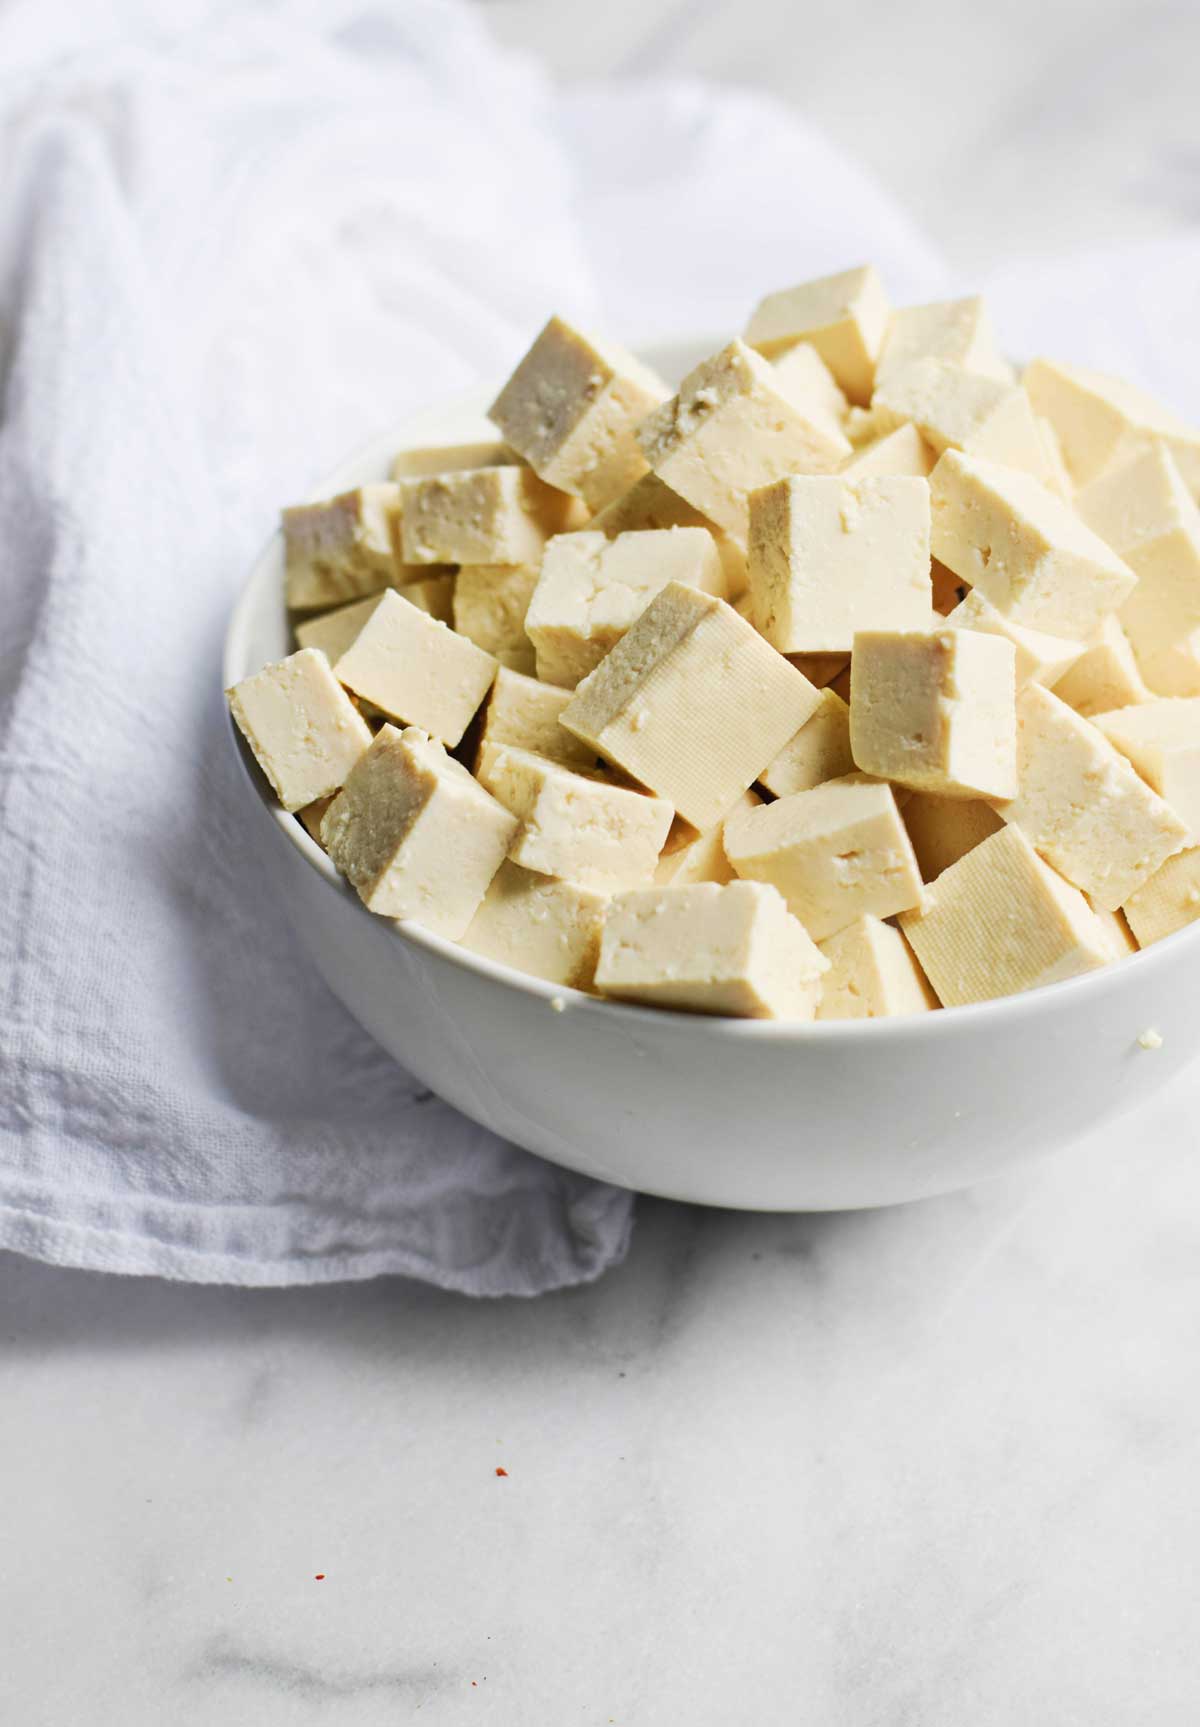 How To Make Stir Fry With Tofu